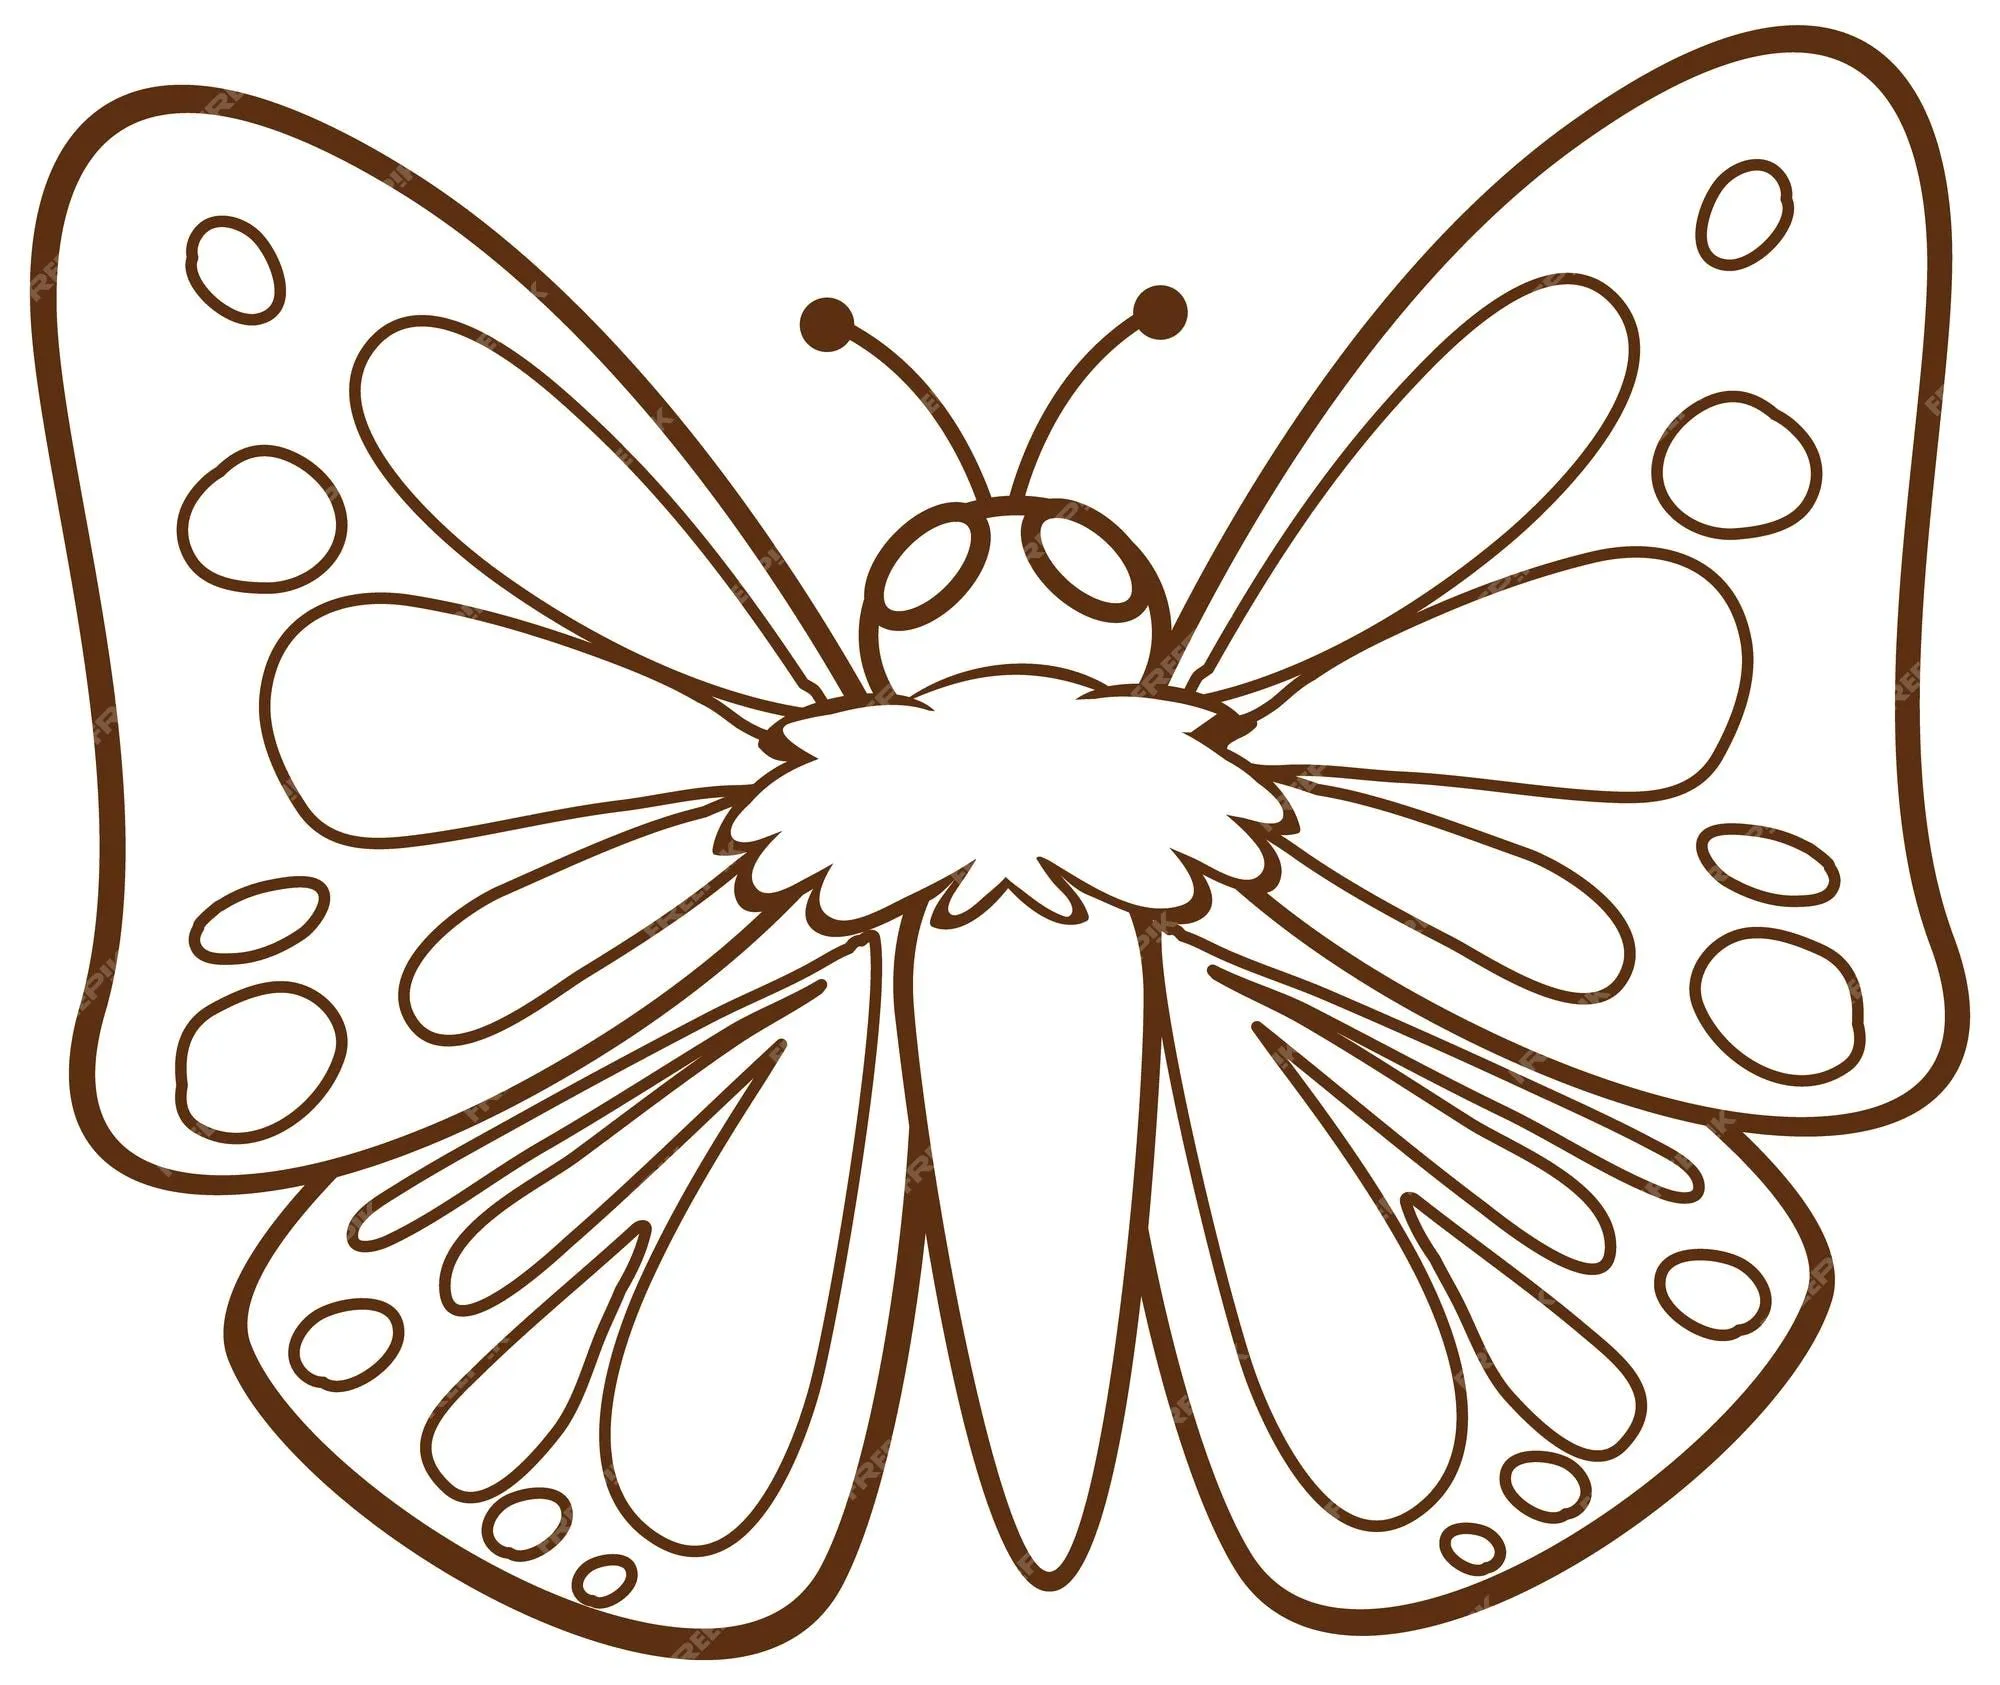 Vectores e ilustraciones de Libros colorear cabeza mariposa para descargar  gratis | Freepik